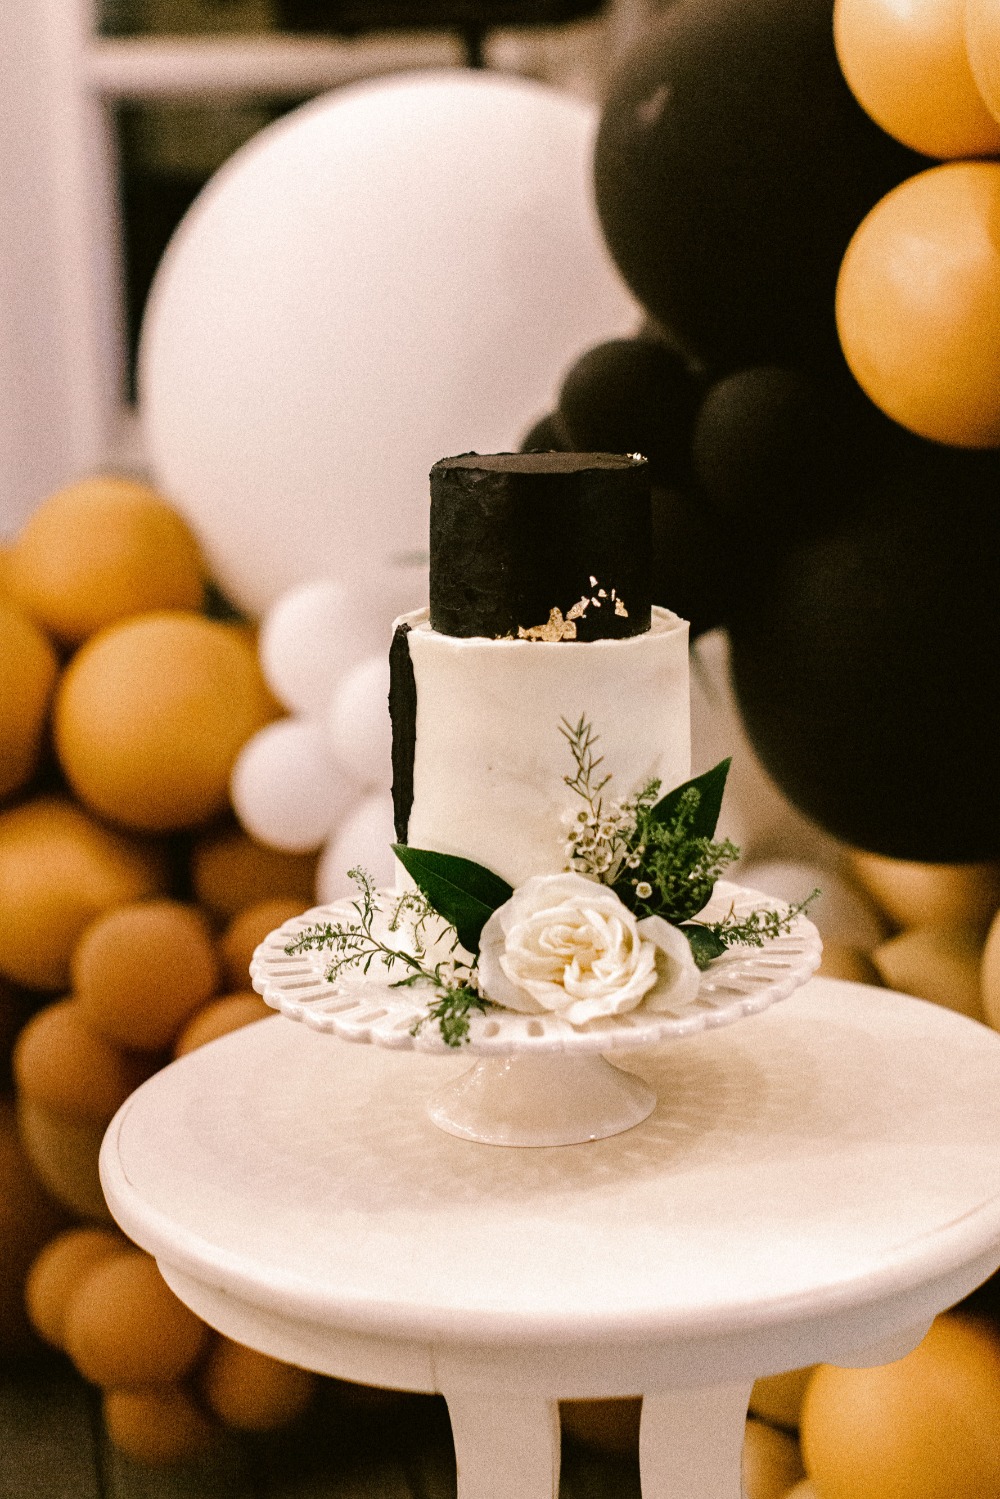 black, white and gold wedding cake